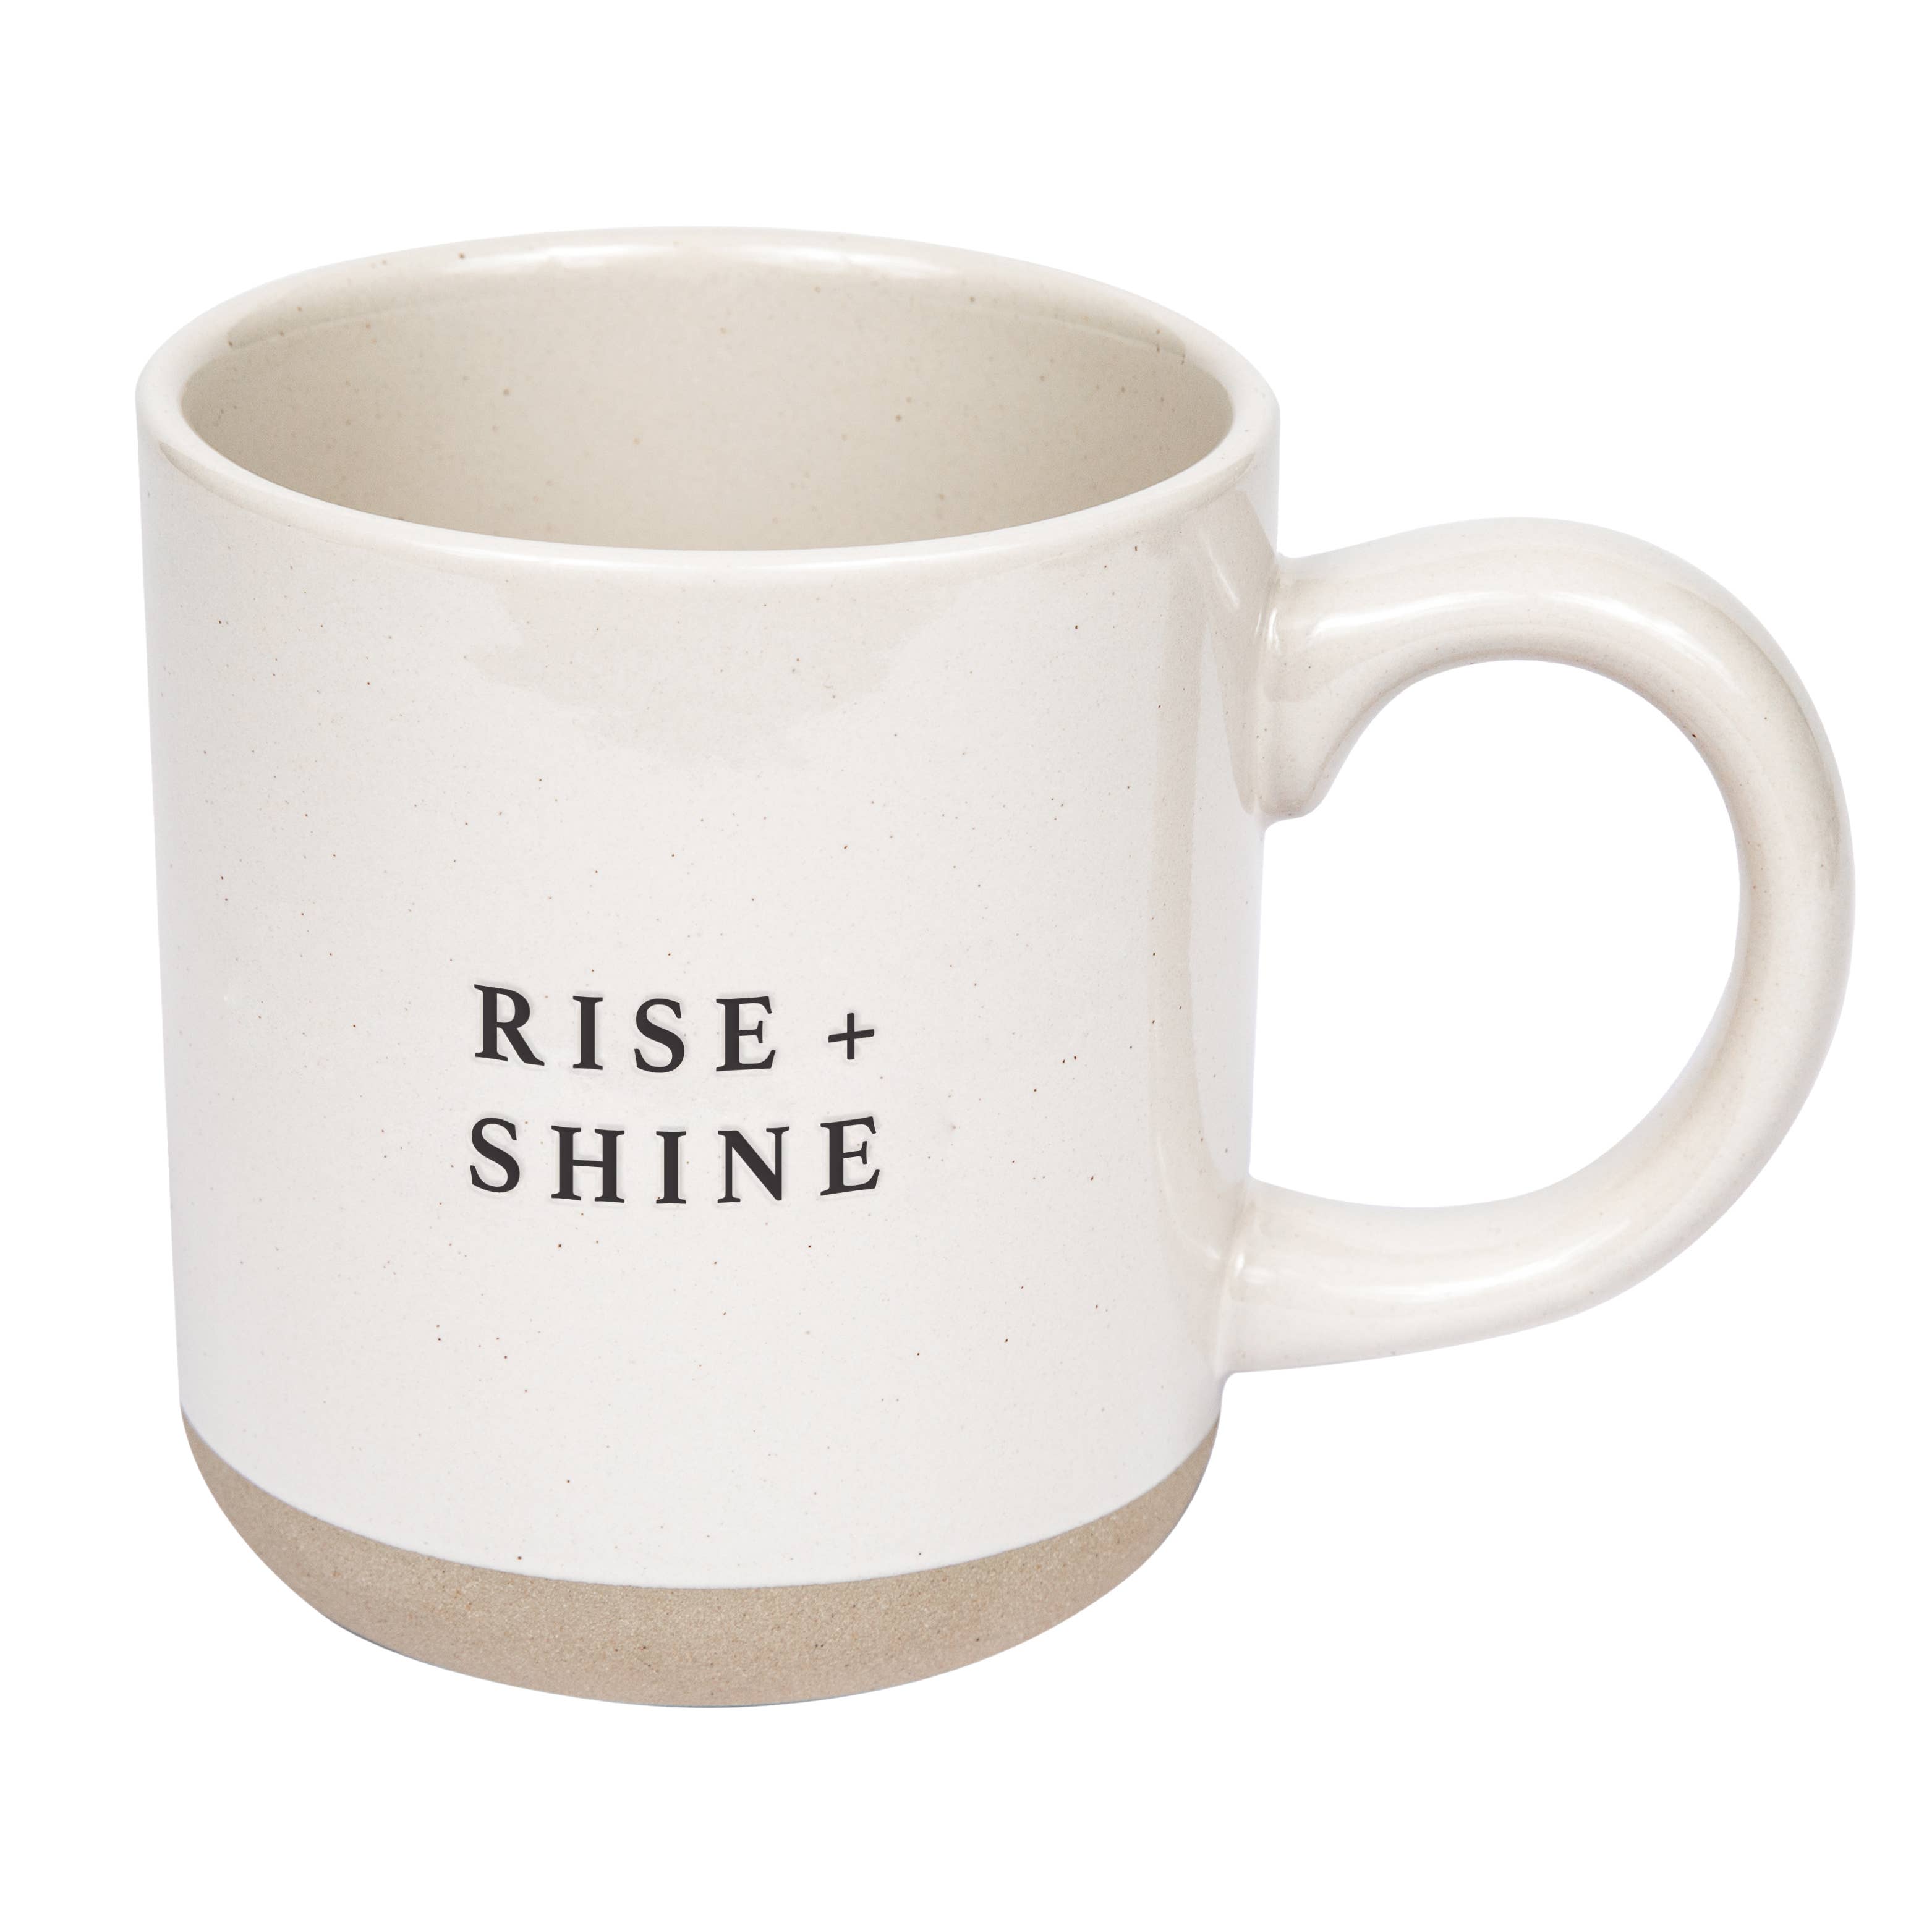 Purchase Wholesale stoneware coffee mugs. Free Returns & Net 60